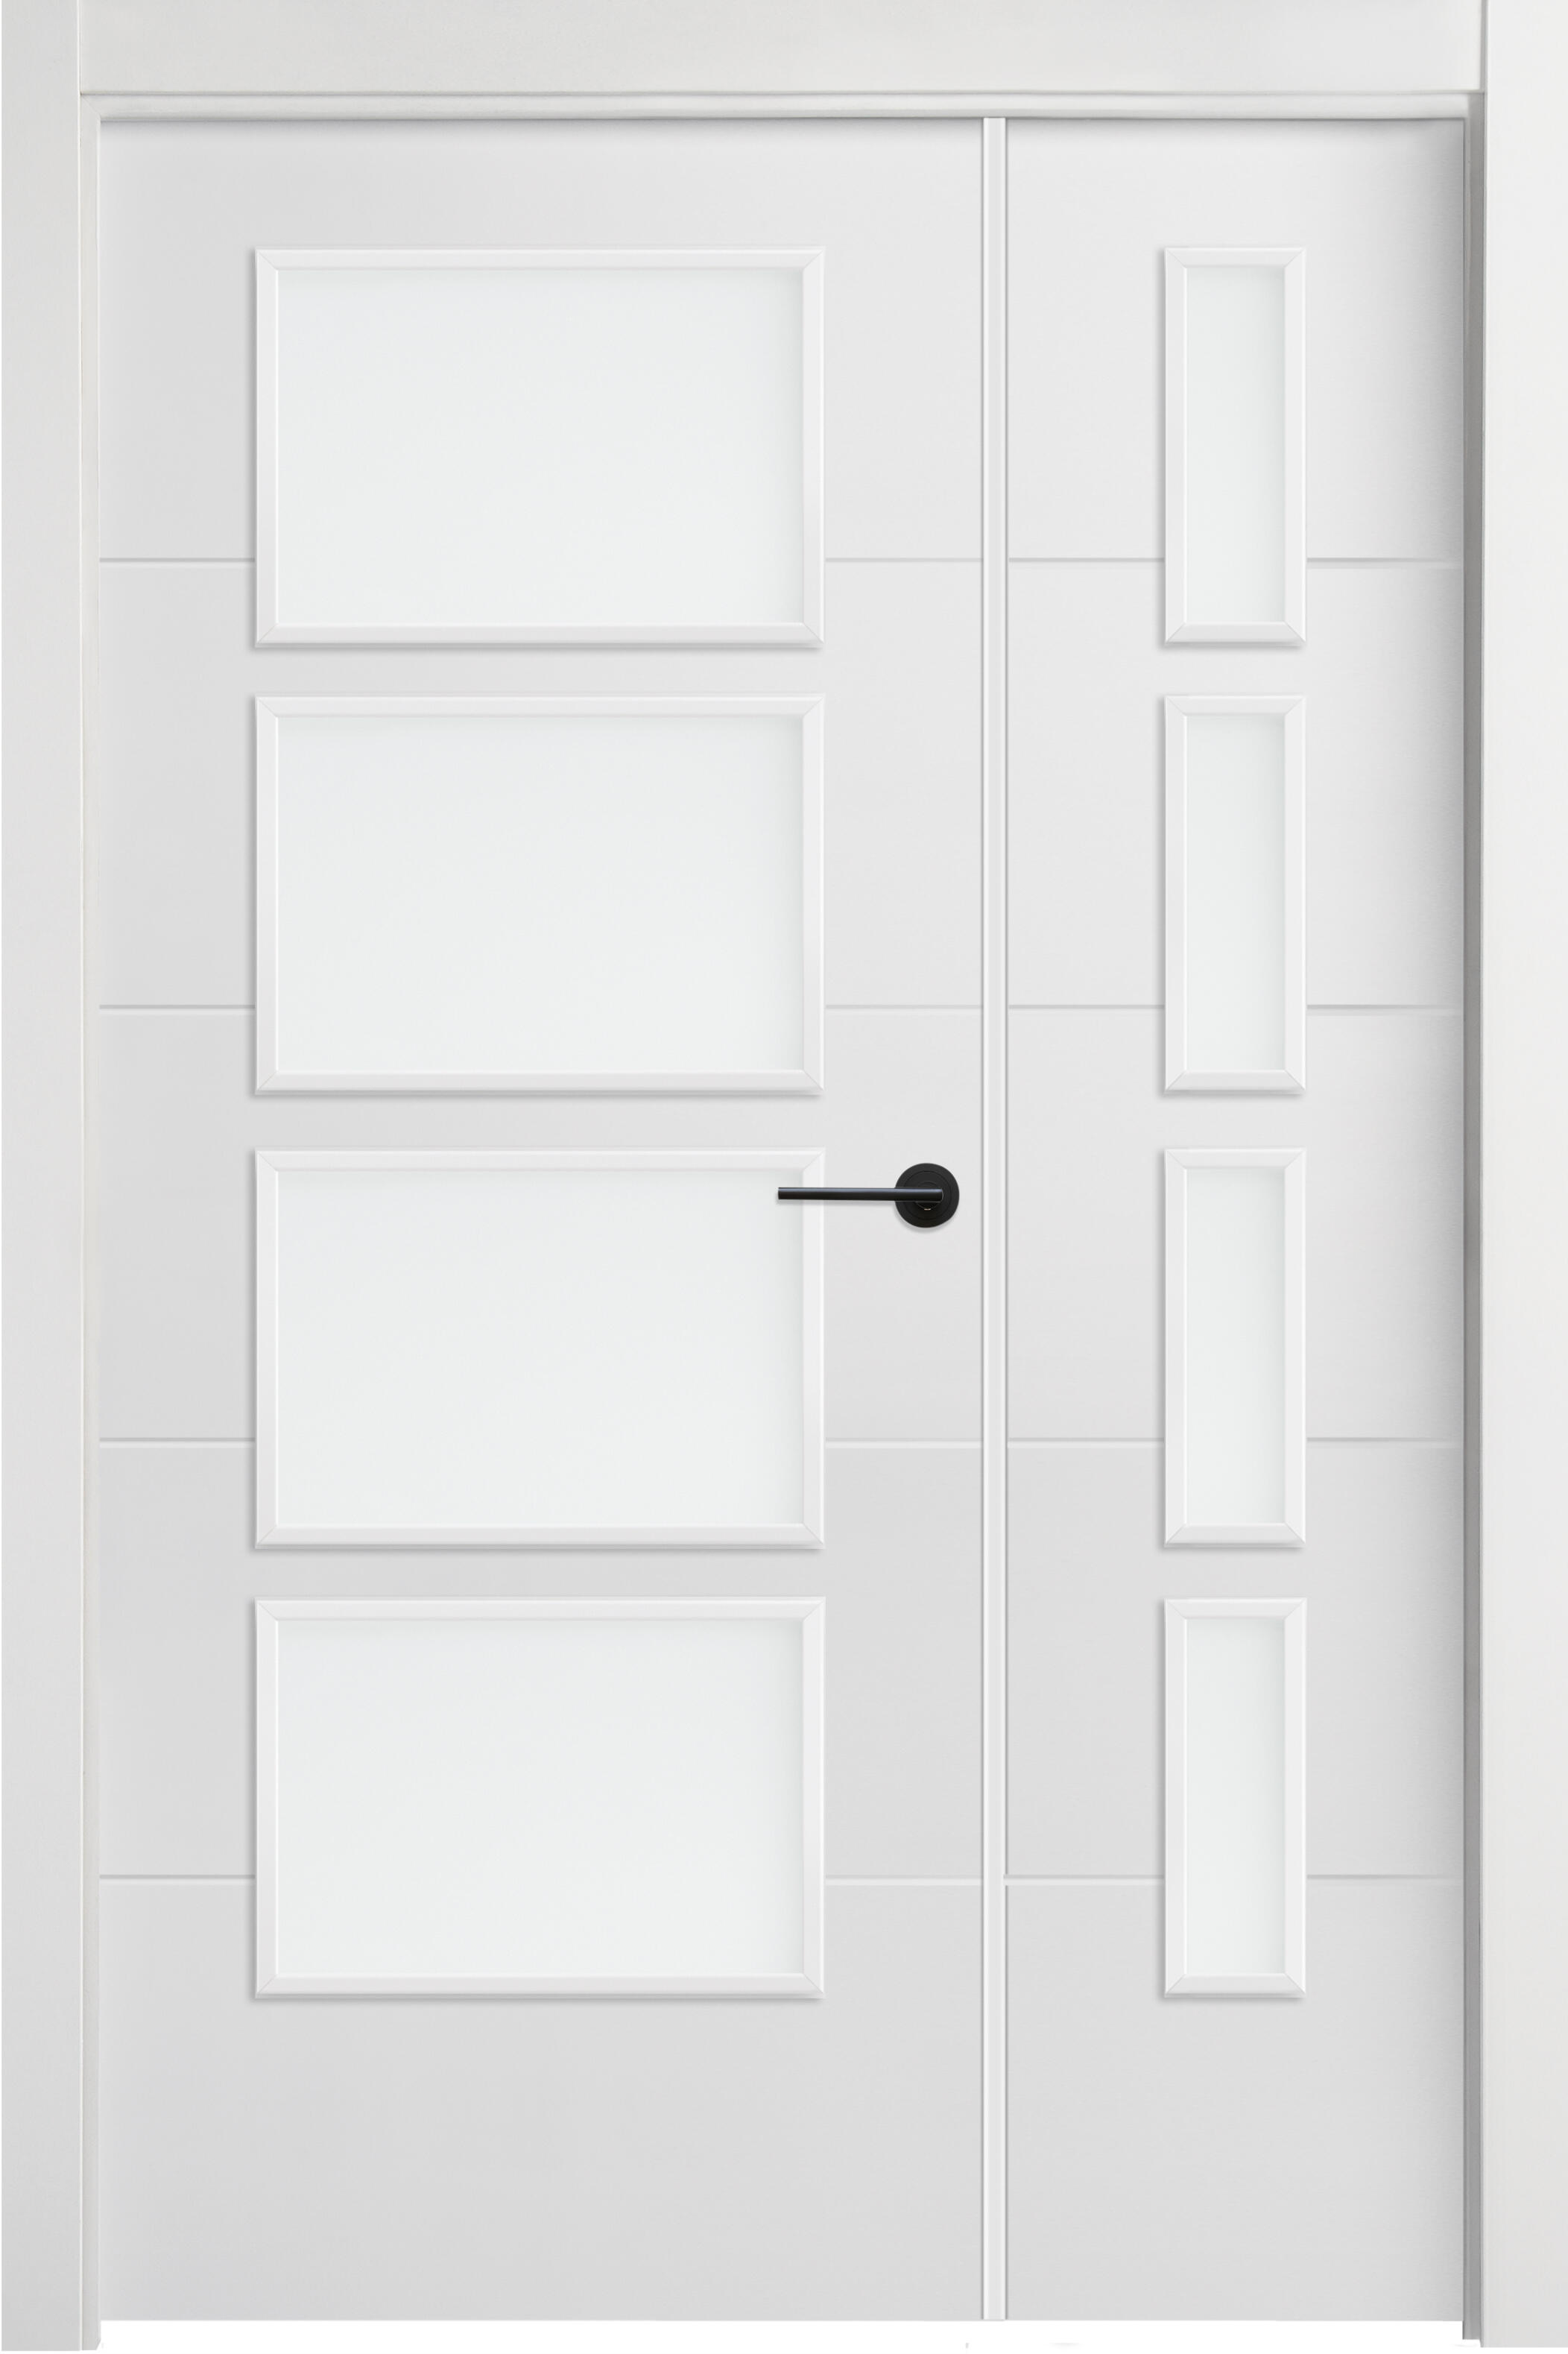 Puerta lucerna plus black blanco de apertura izquierdacon cristal de 11x115 cm